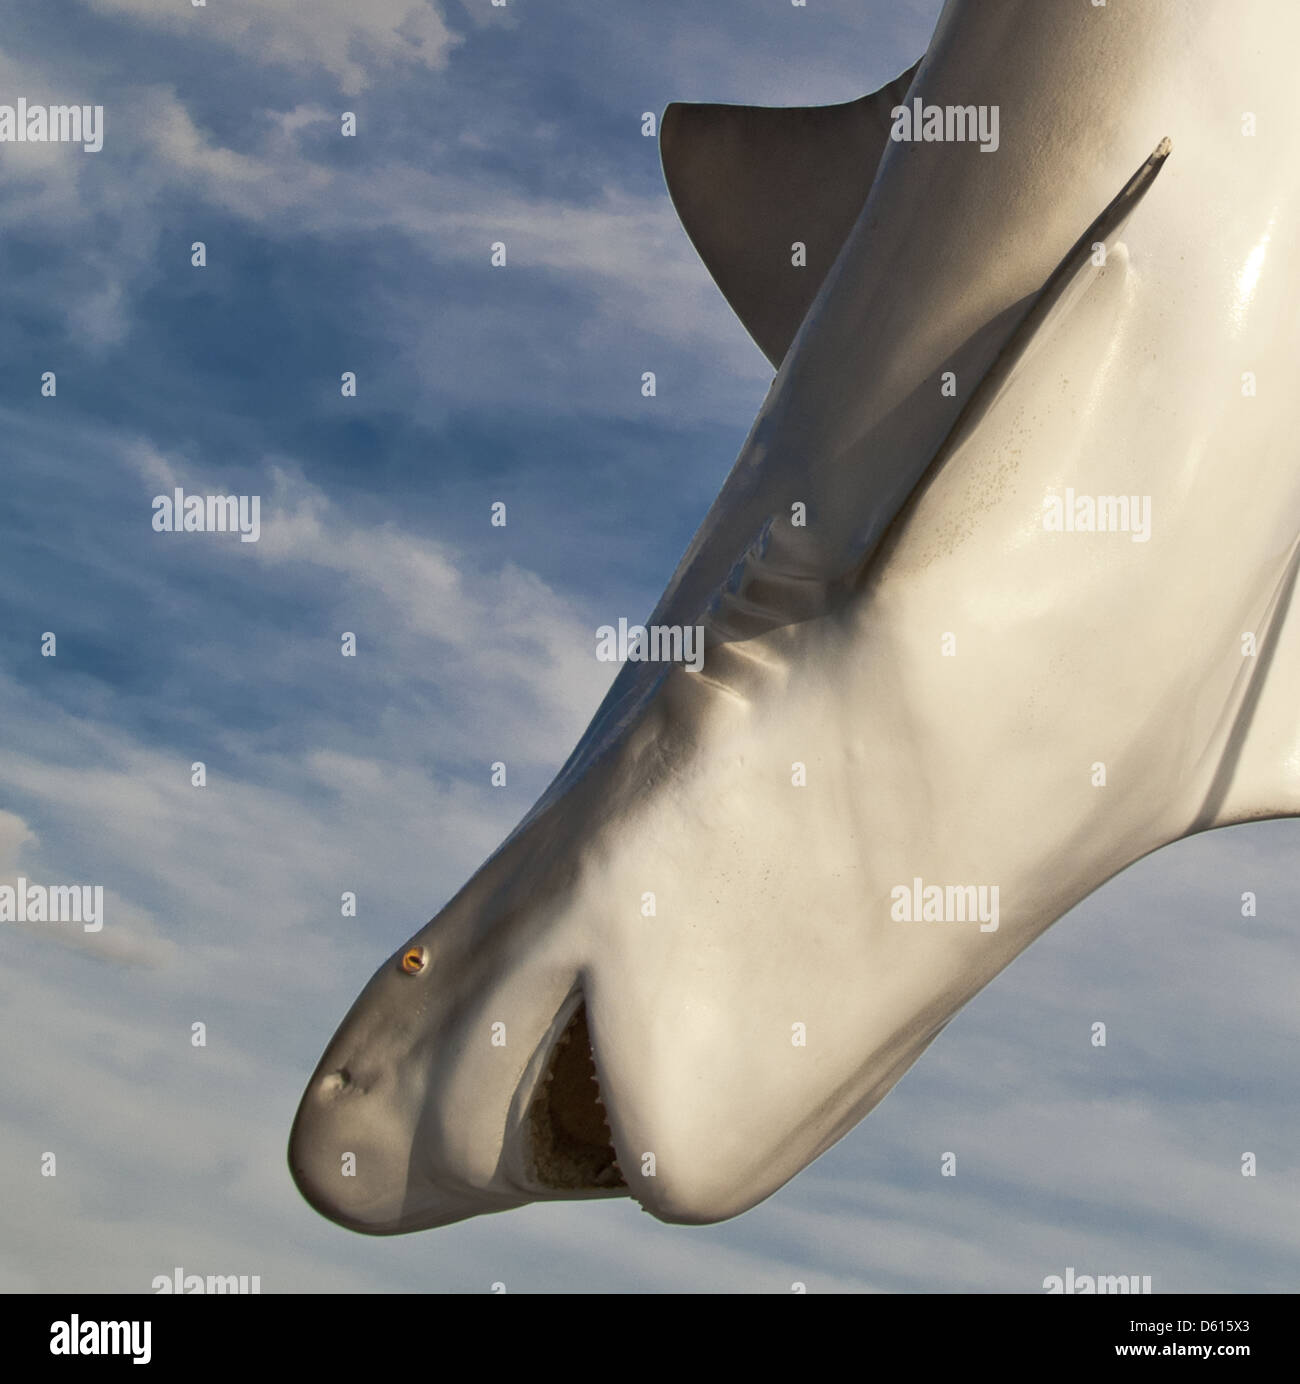 Fiberglass shark used for tourist photos on Fernandina Beach pier on Amelia Island in Florida, USA Stock Photo